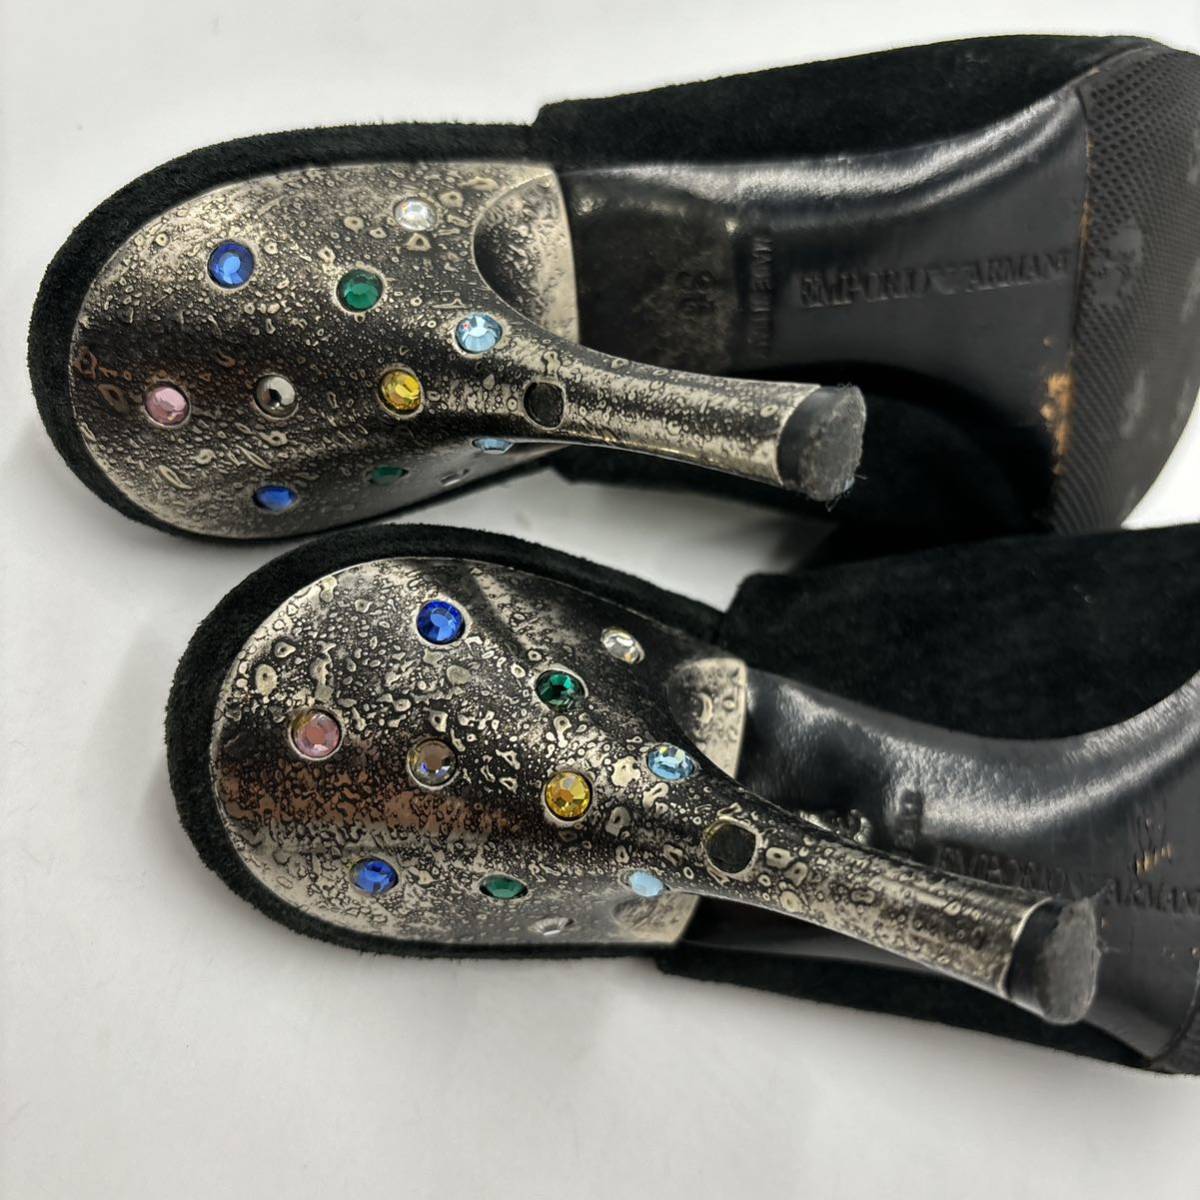 C * Italy made \' feeling of luxury overflow \' EMPORIO ARMANI Emporio Armani original leather rhinestone equipment ornament mules / heel sandals EU36 22.5cm